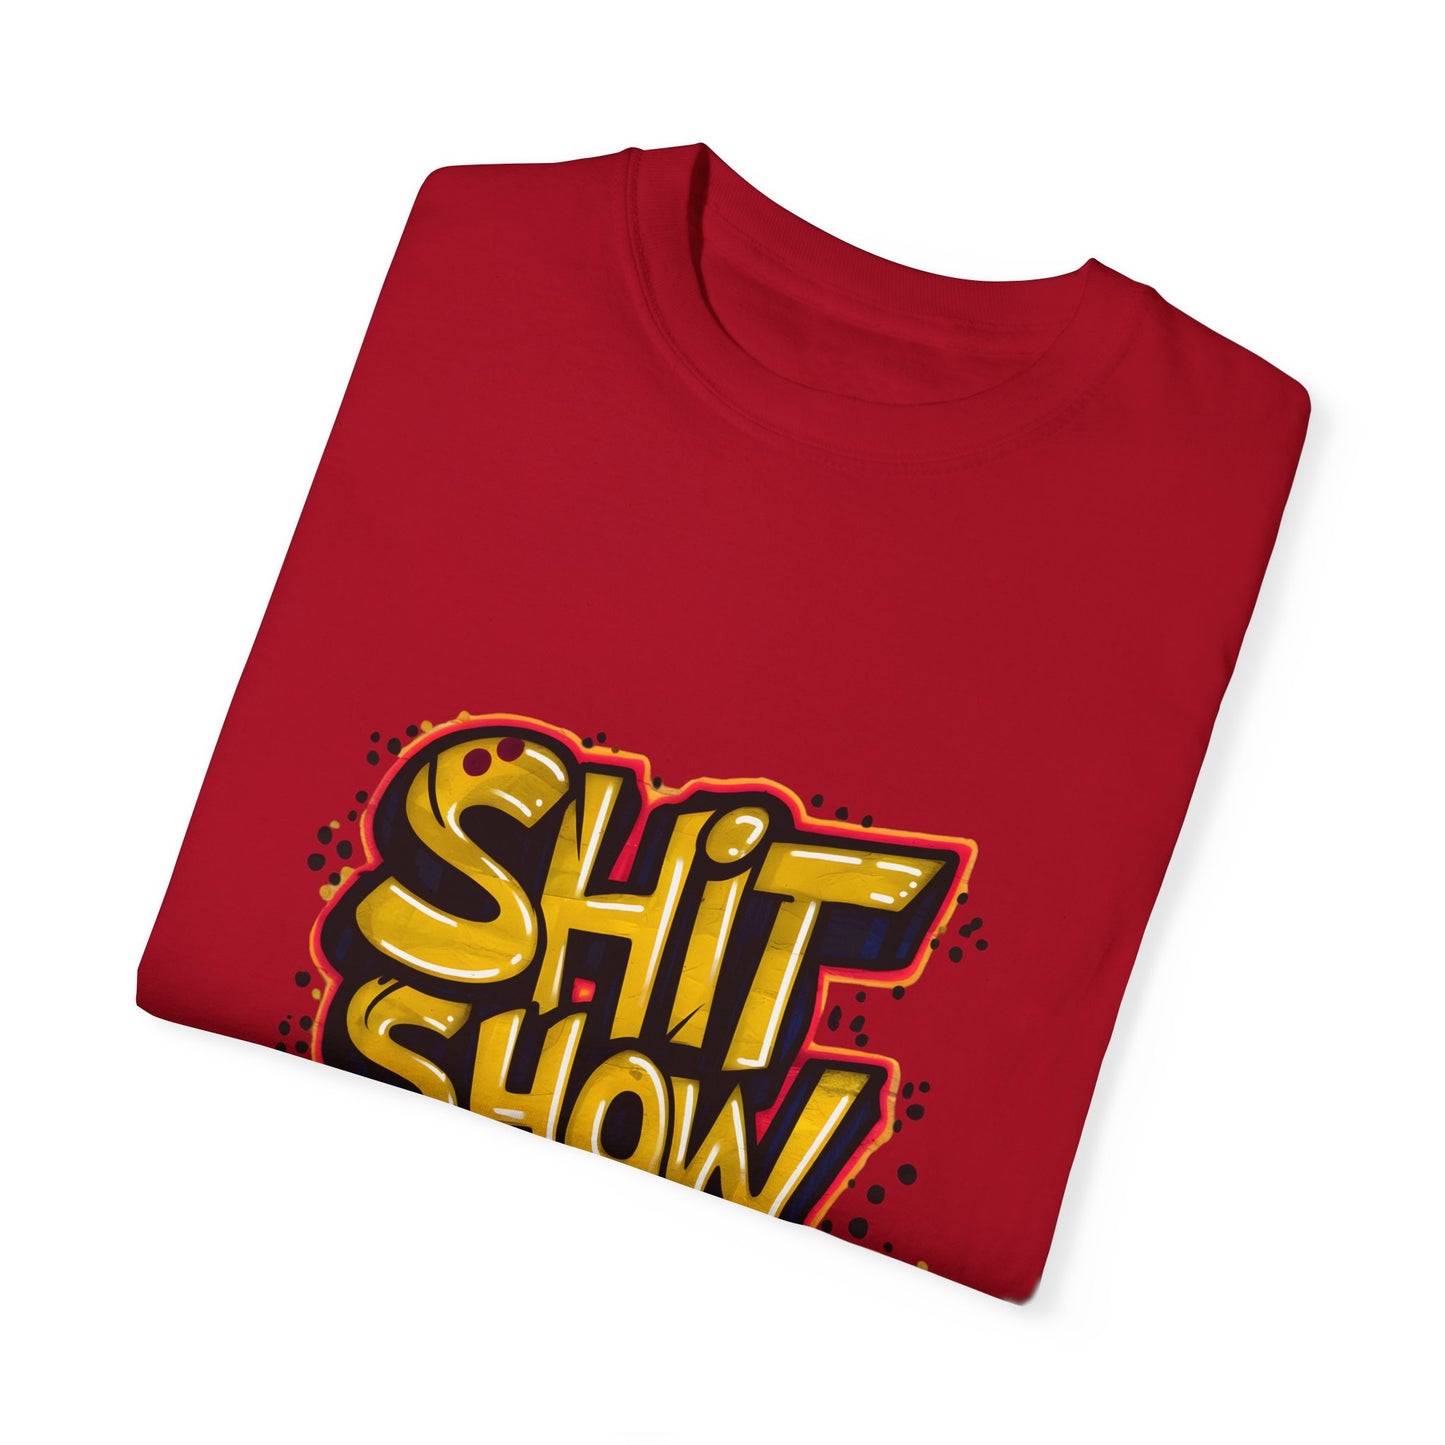 Shit Show Supervisor Urban Sarcastic Graphic Unisex Garment Dyed T-shirt Cotton Funny Humorous Graphic Soft Premium Unisex Men Women Red T-shirt Birthday Gift-20